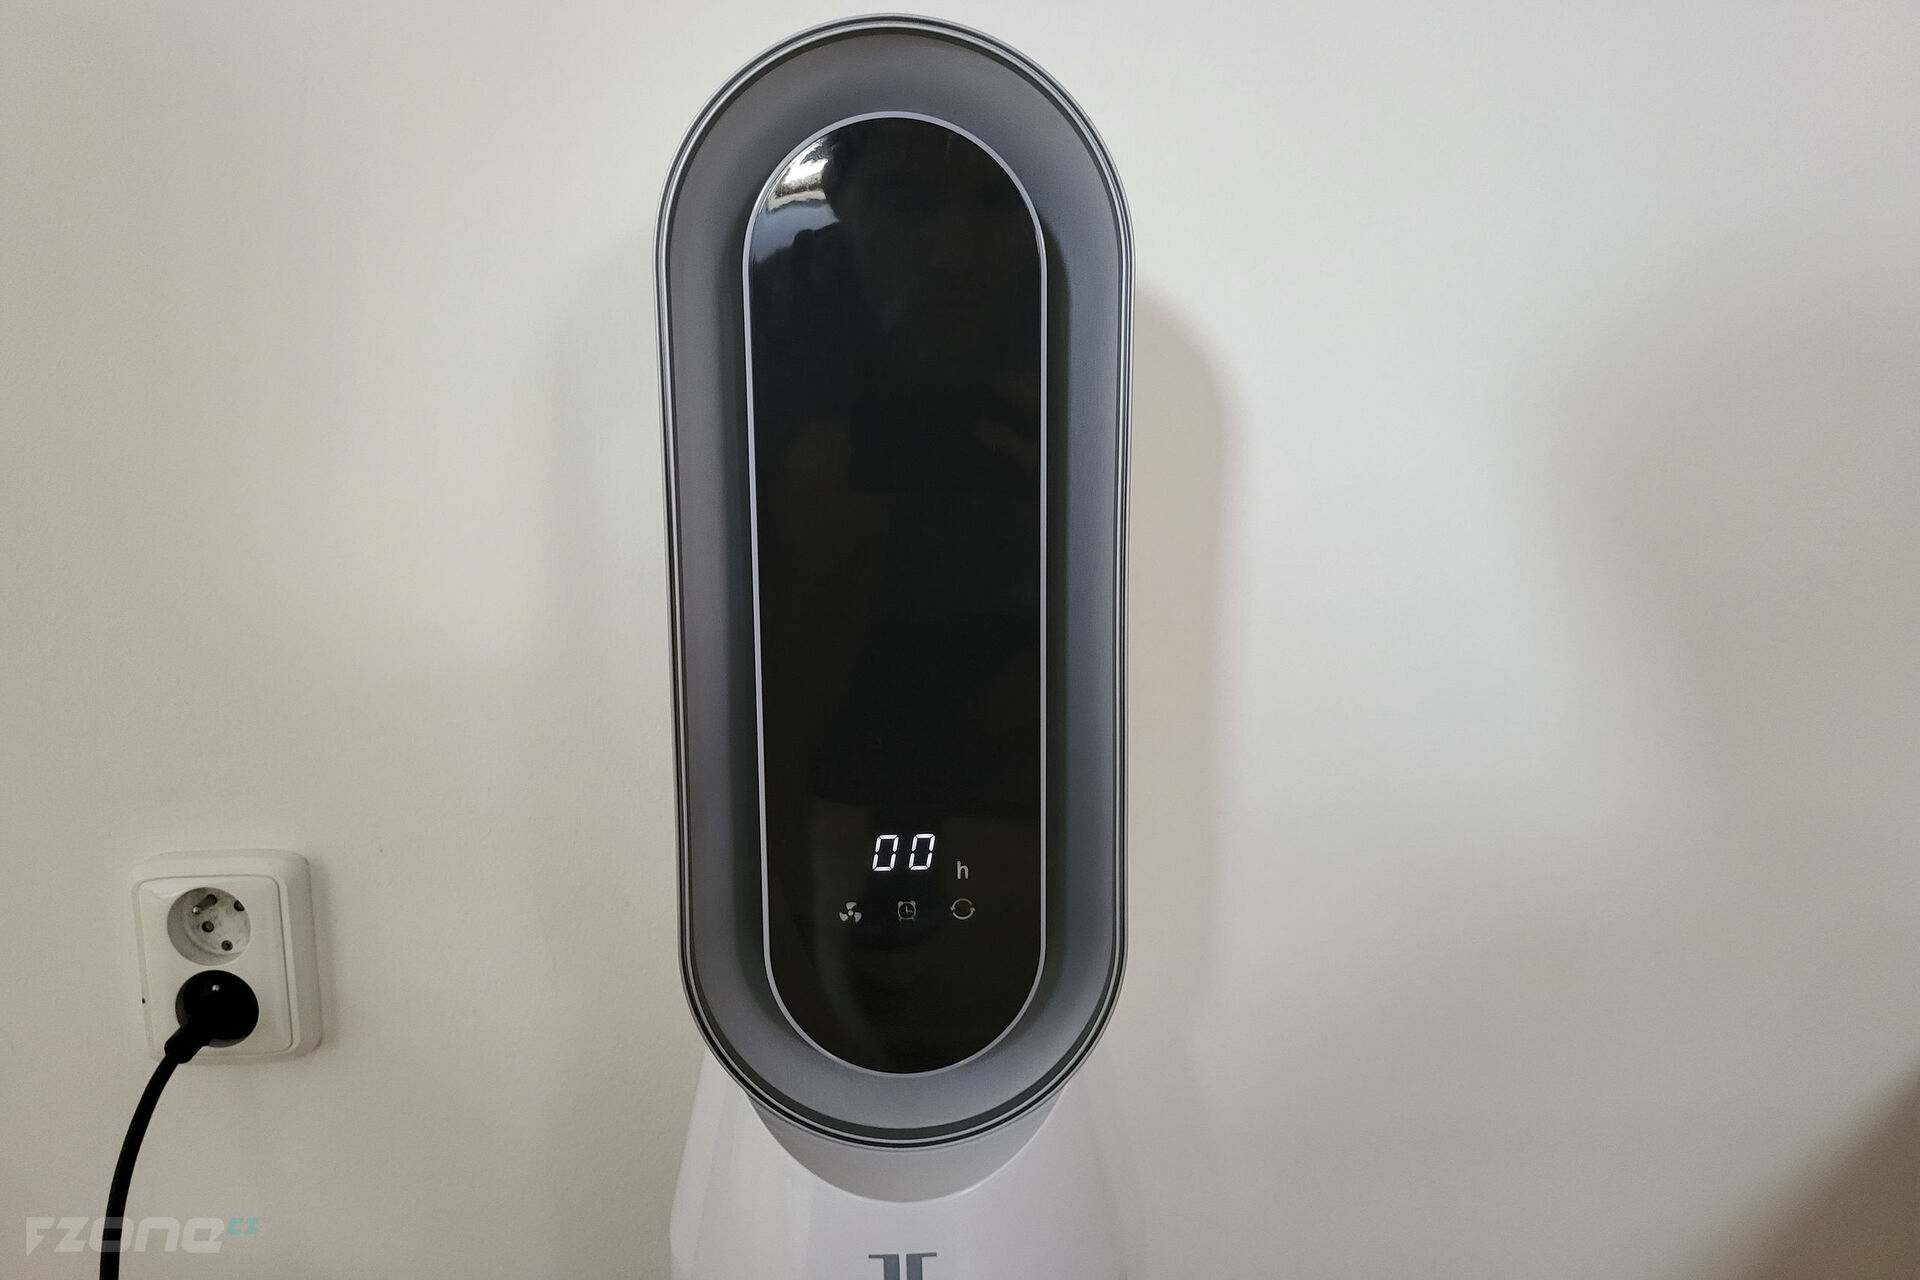 Tesla Smart Heater HTR300